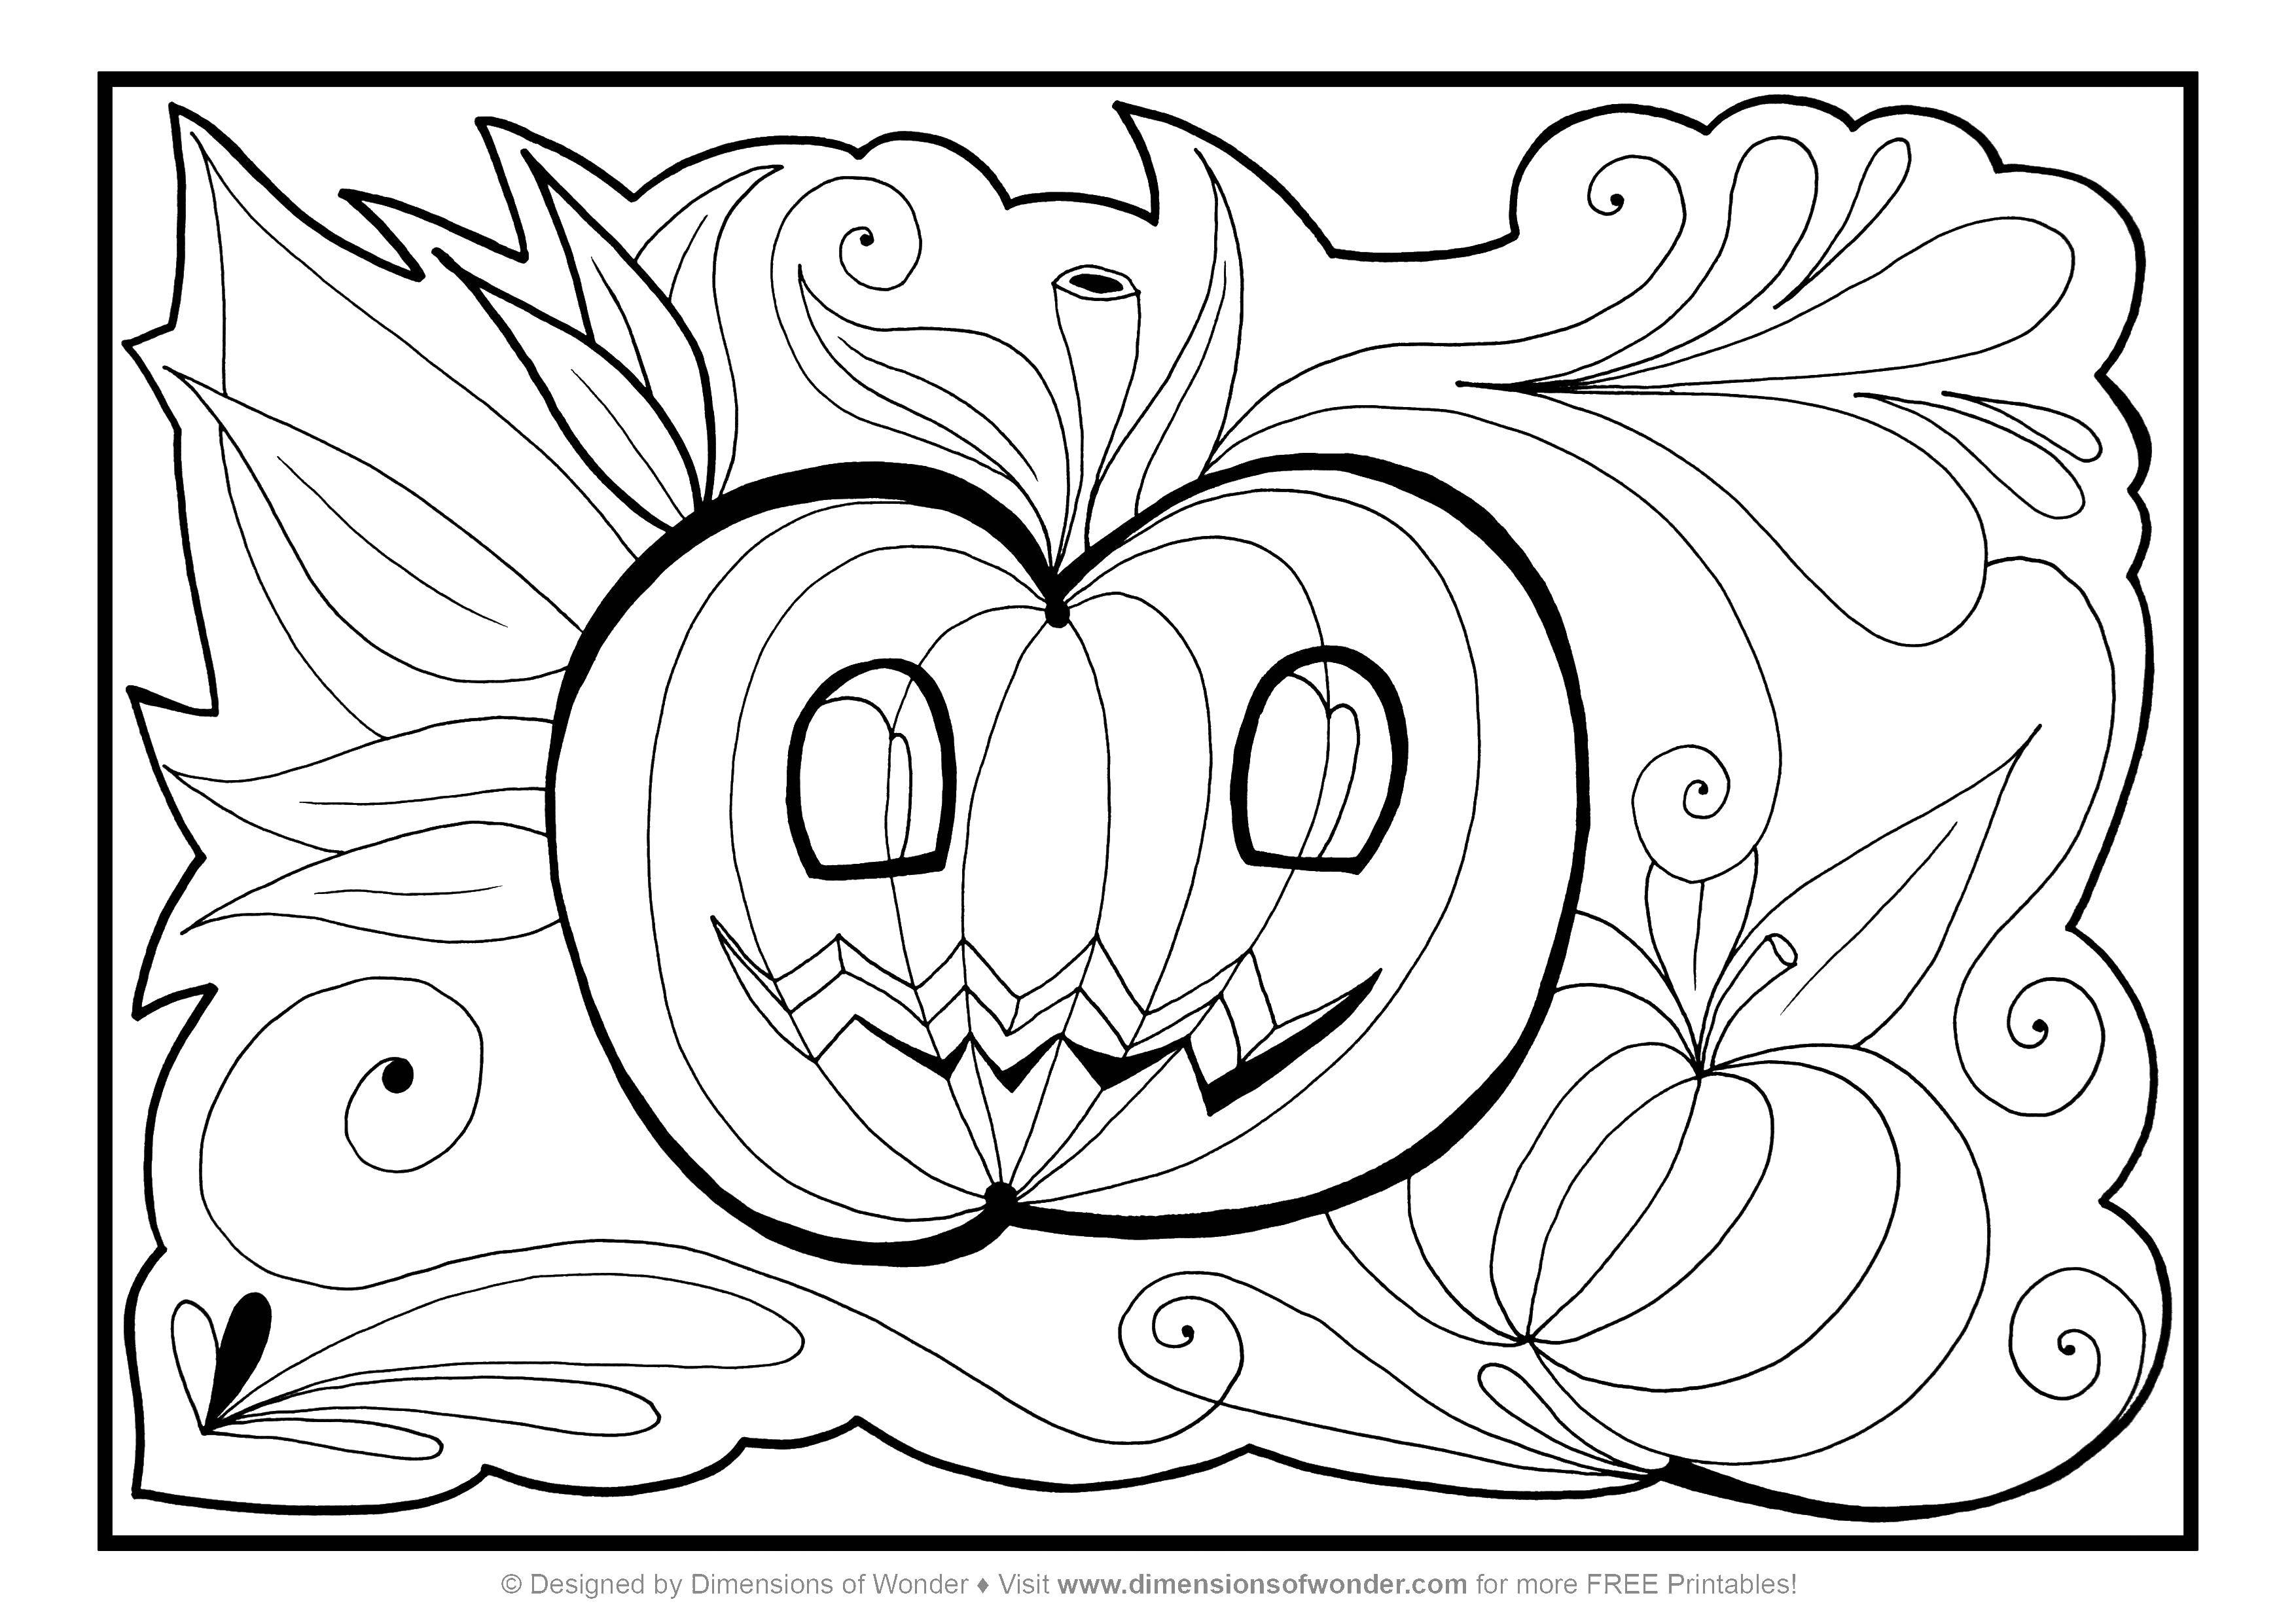 Coloring Pumpkin Halloween. Category mask. Tags:  pumpkin, Halloween.